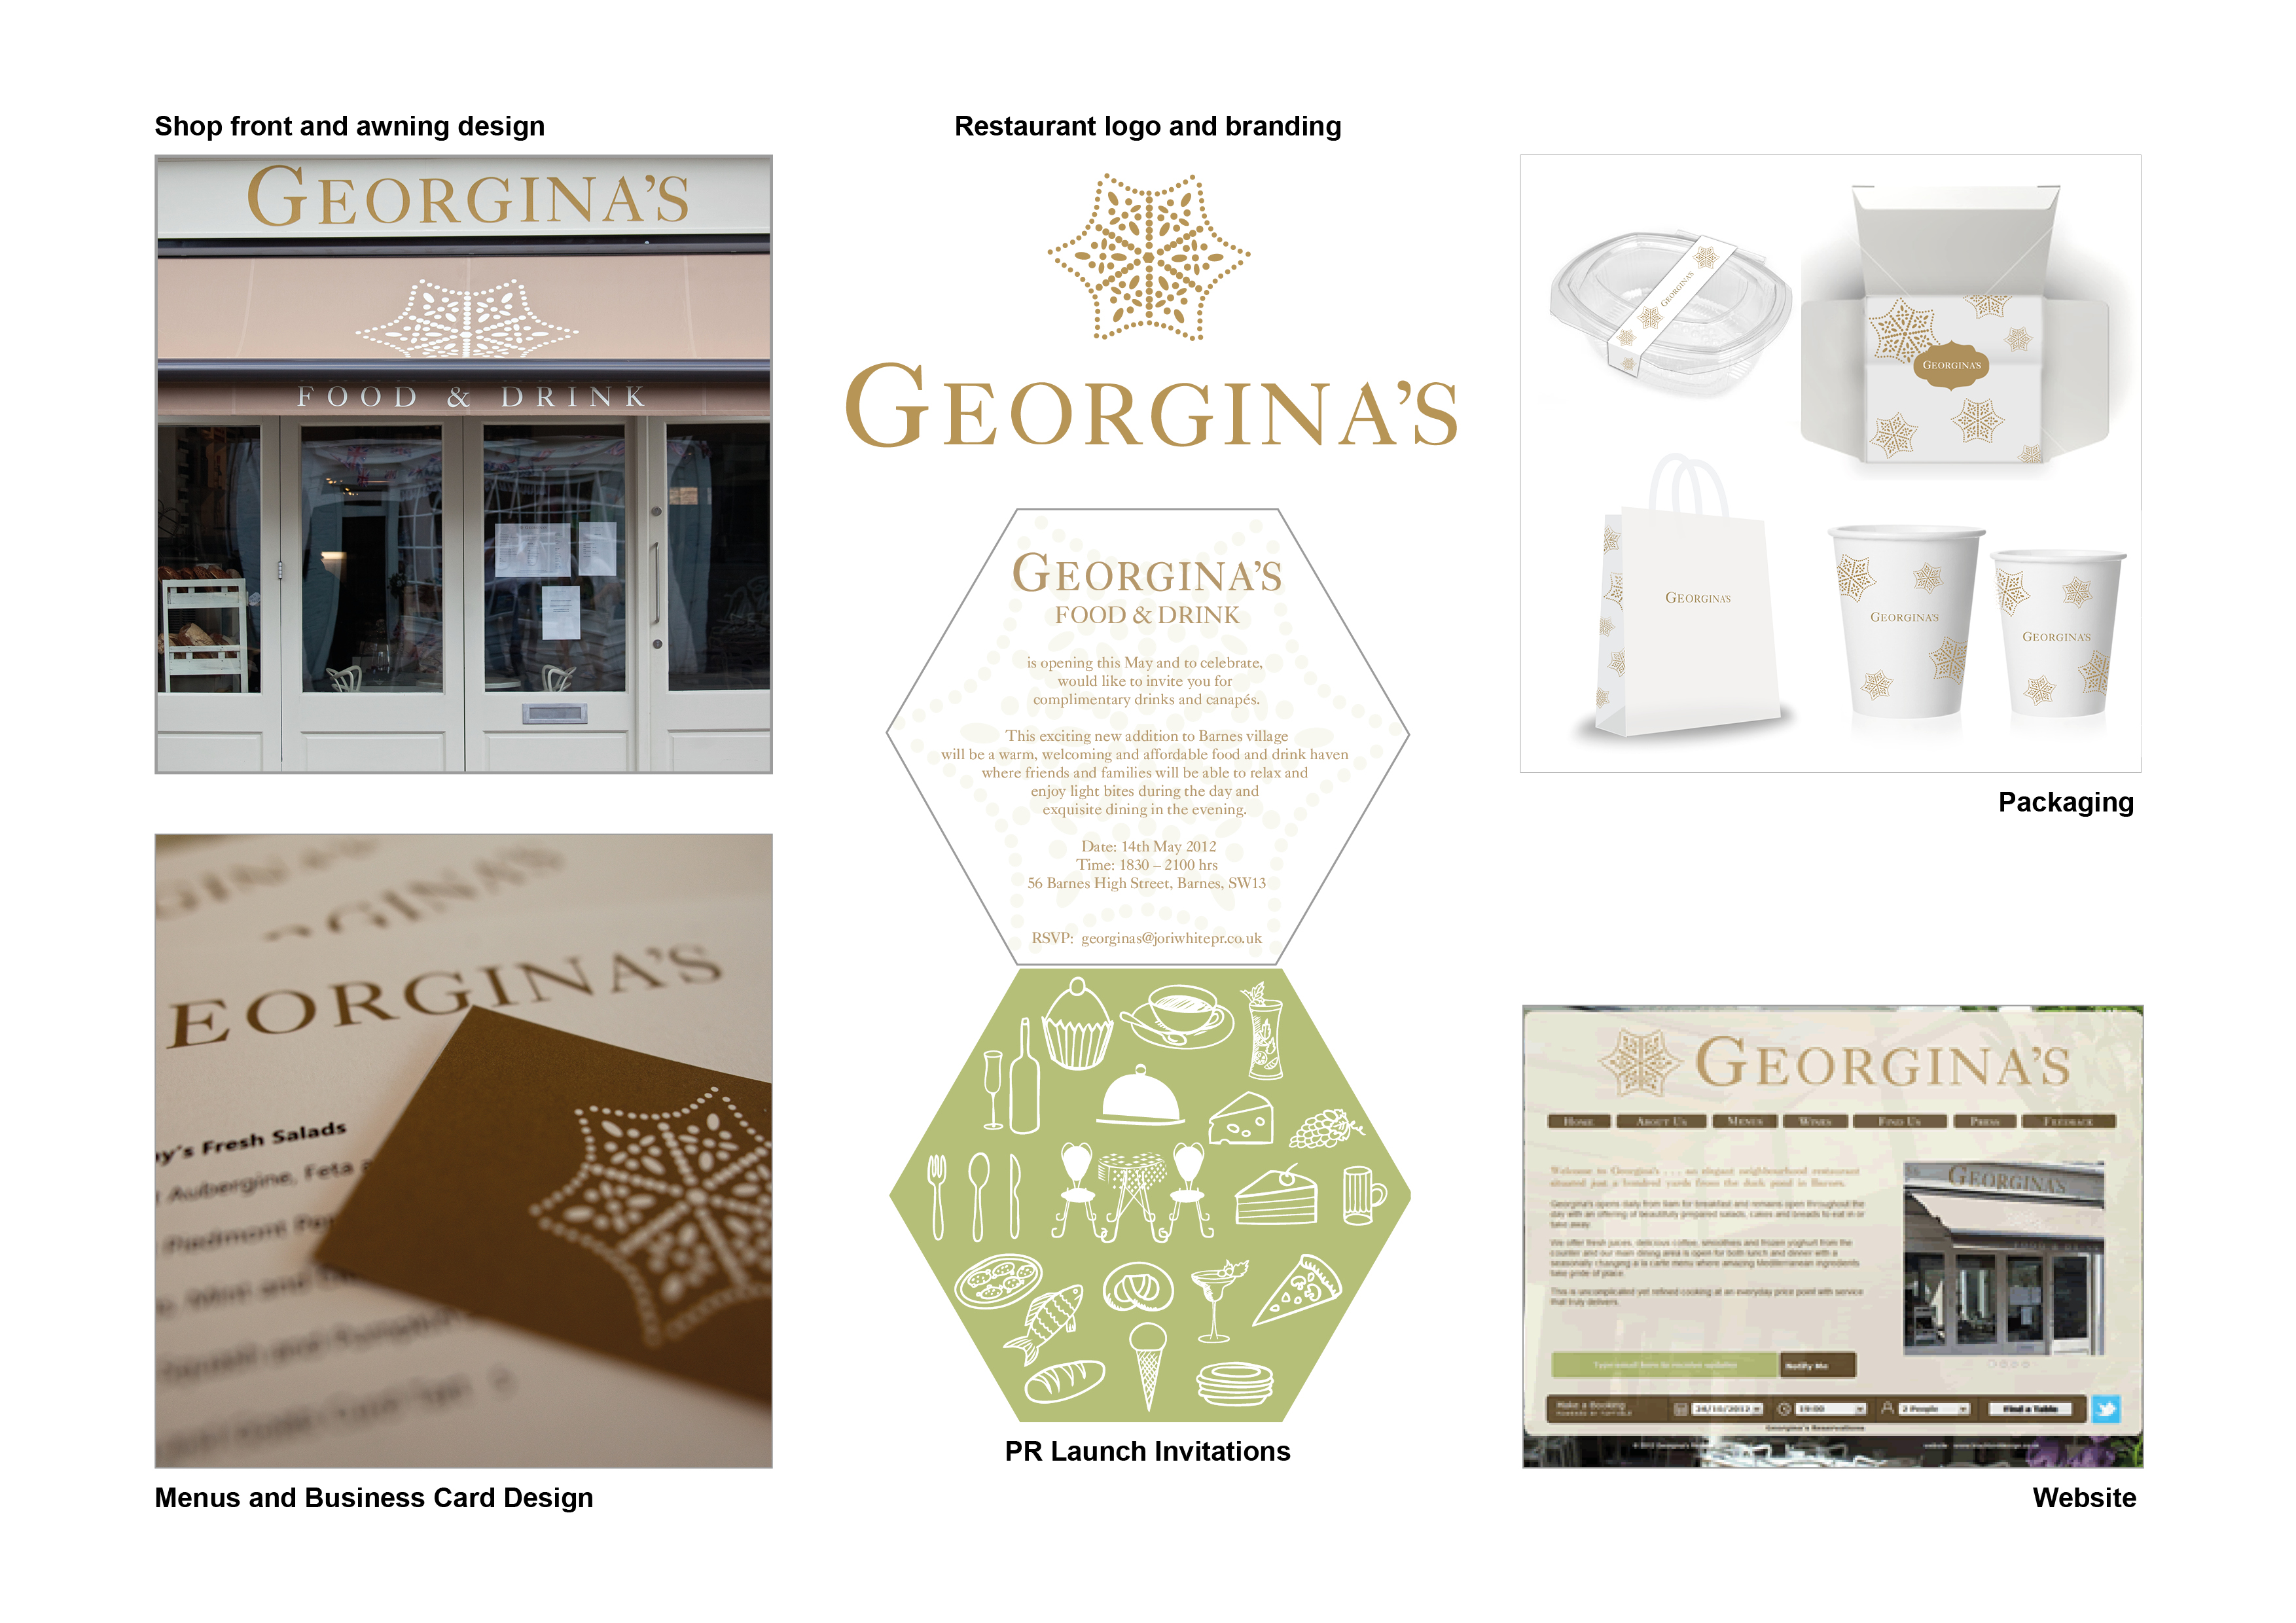 Georgina's Restaurant: Restaurant signage, Menus, Business Cards, Packaging, Vouchers, Advertising and Website